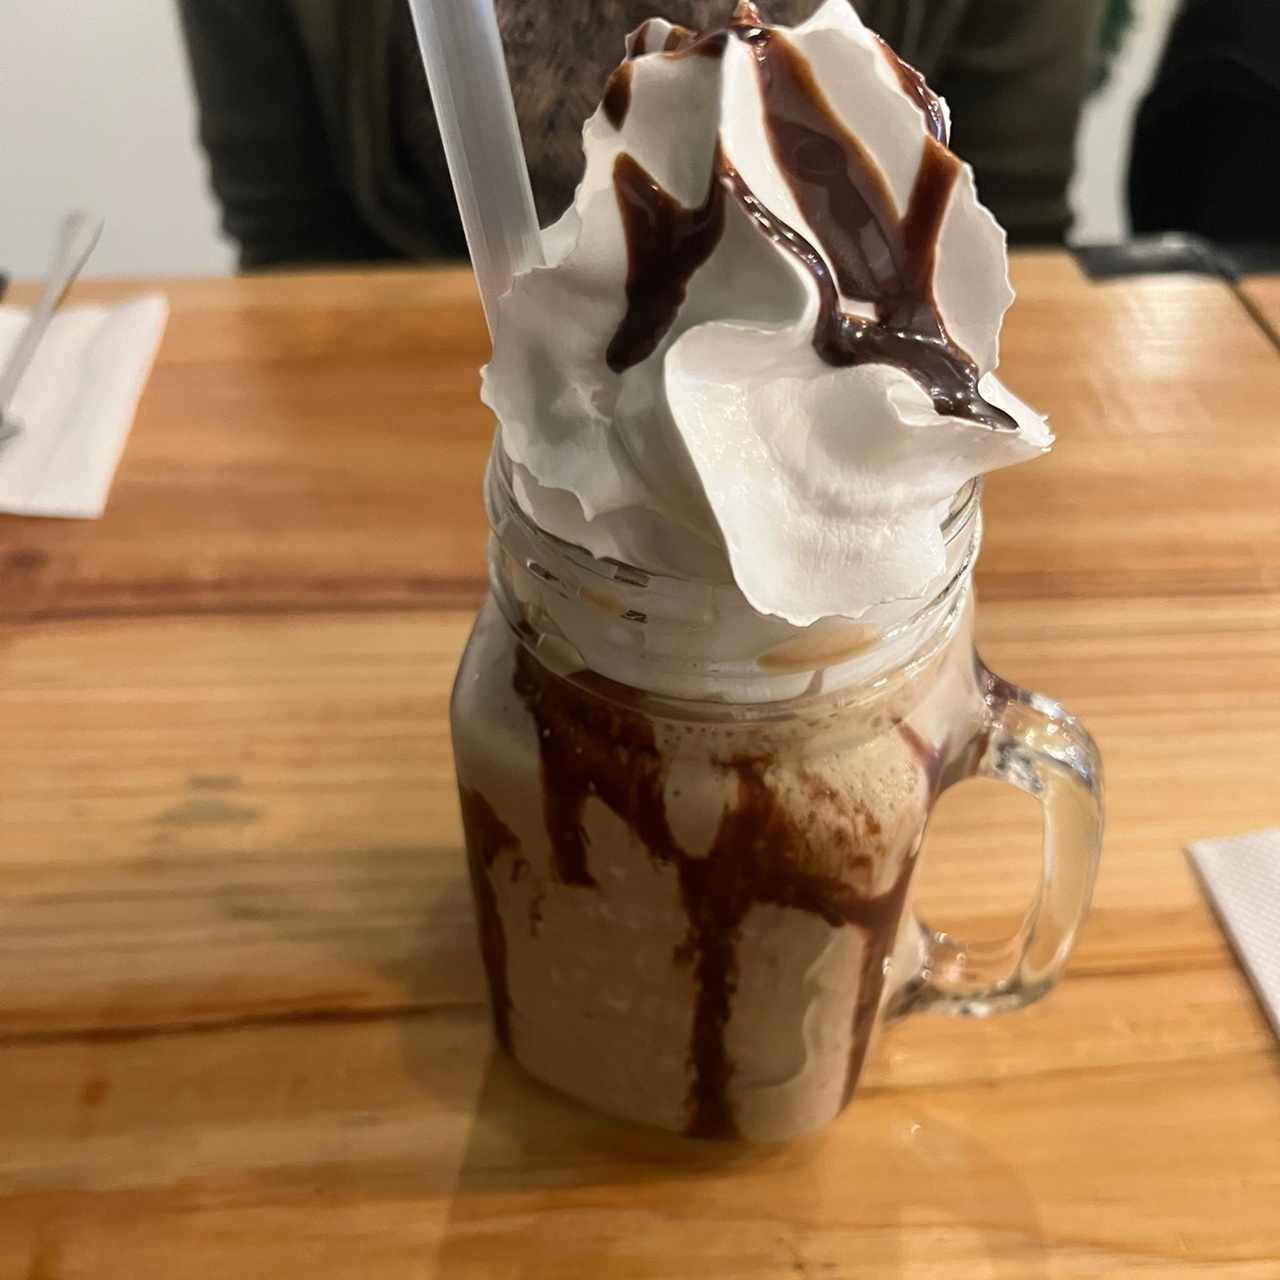 Frappuccino de chocolate